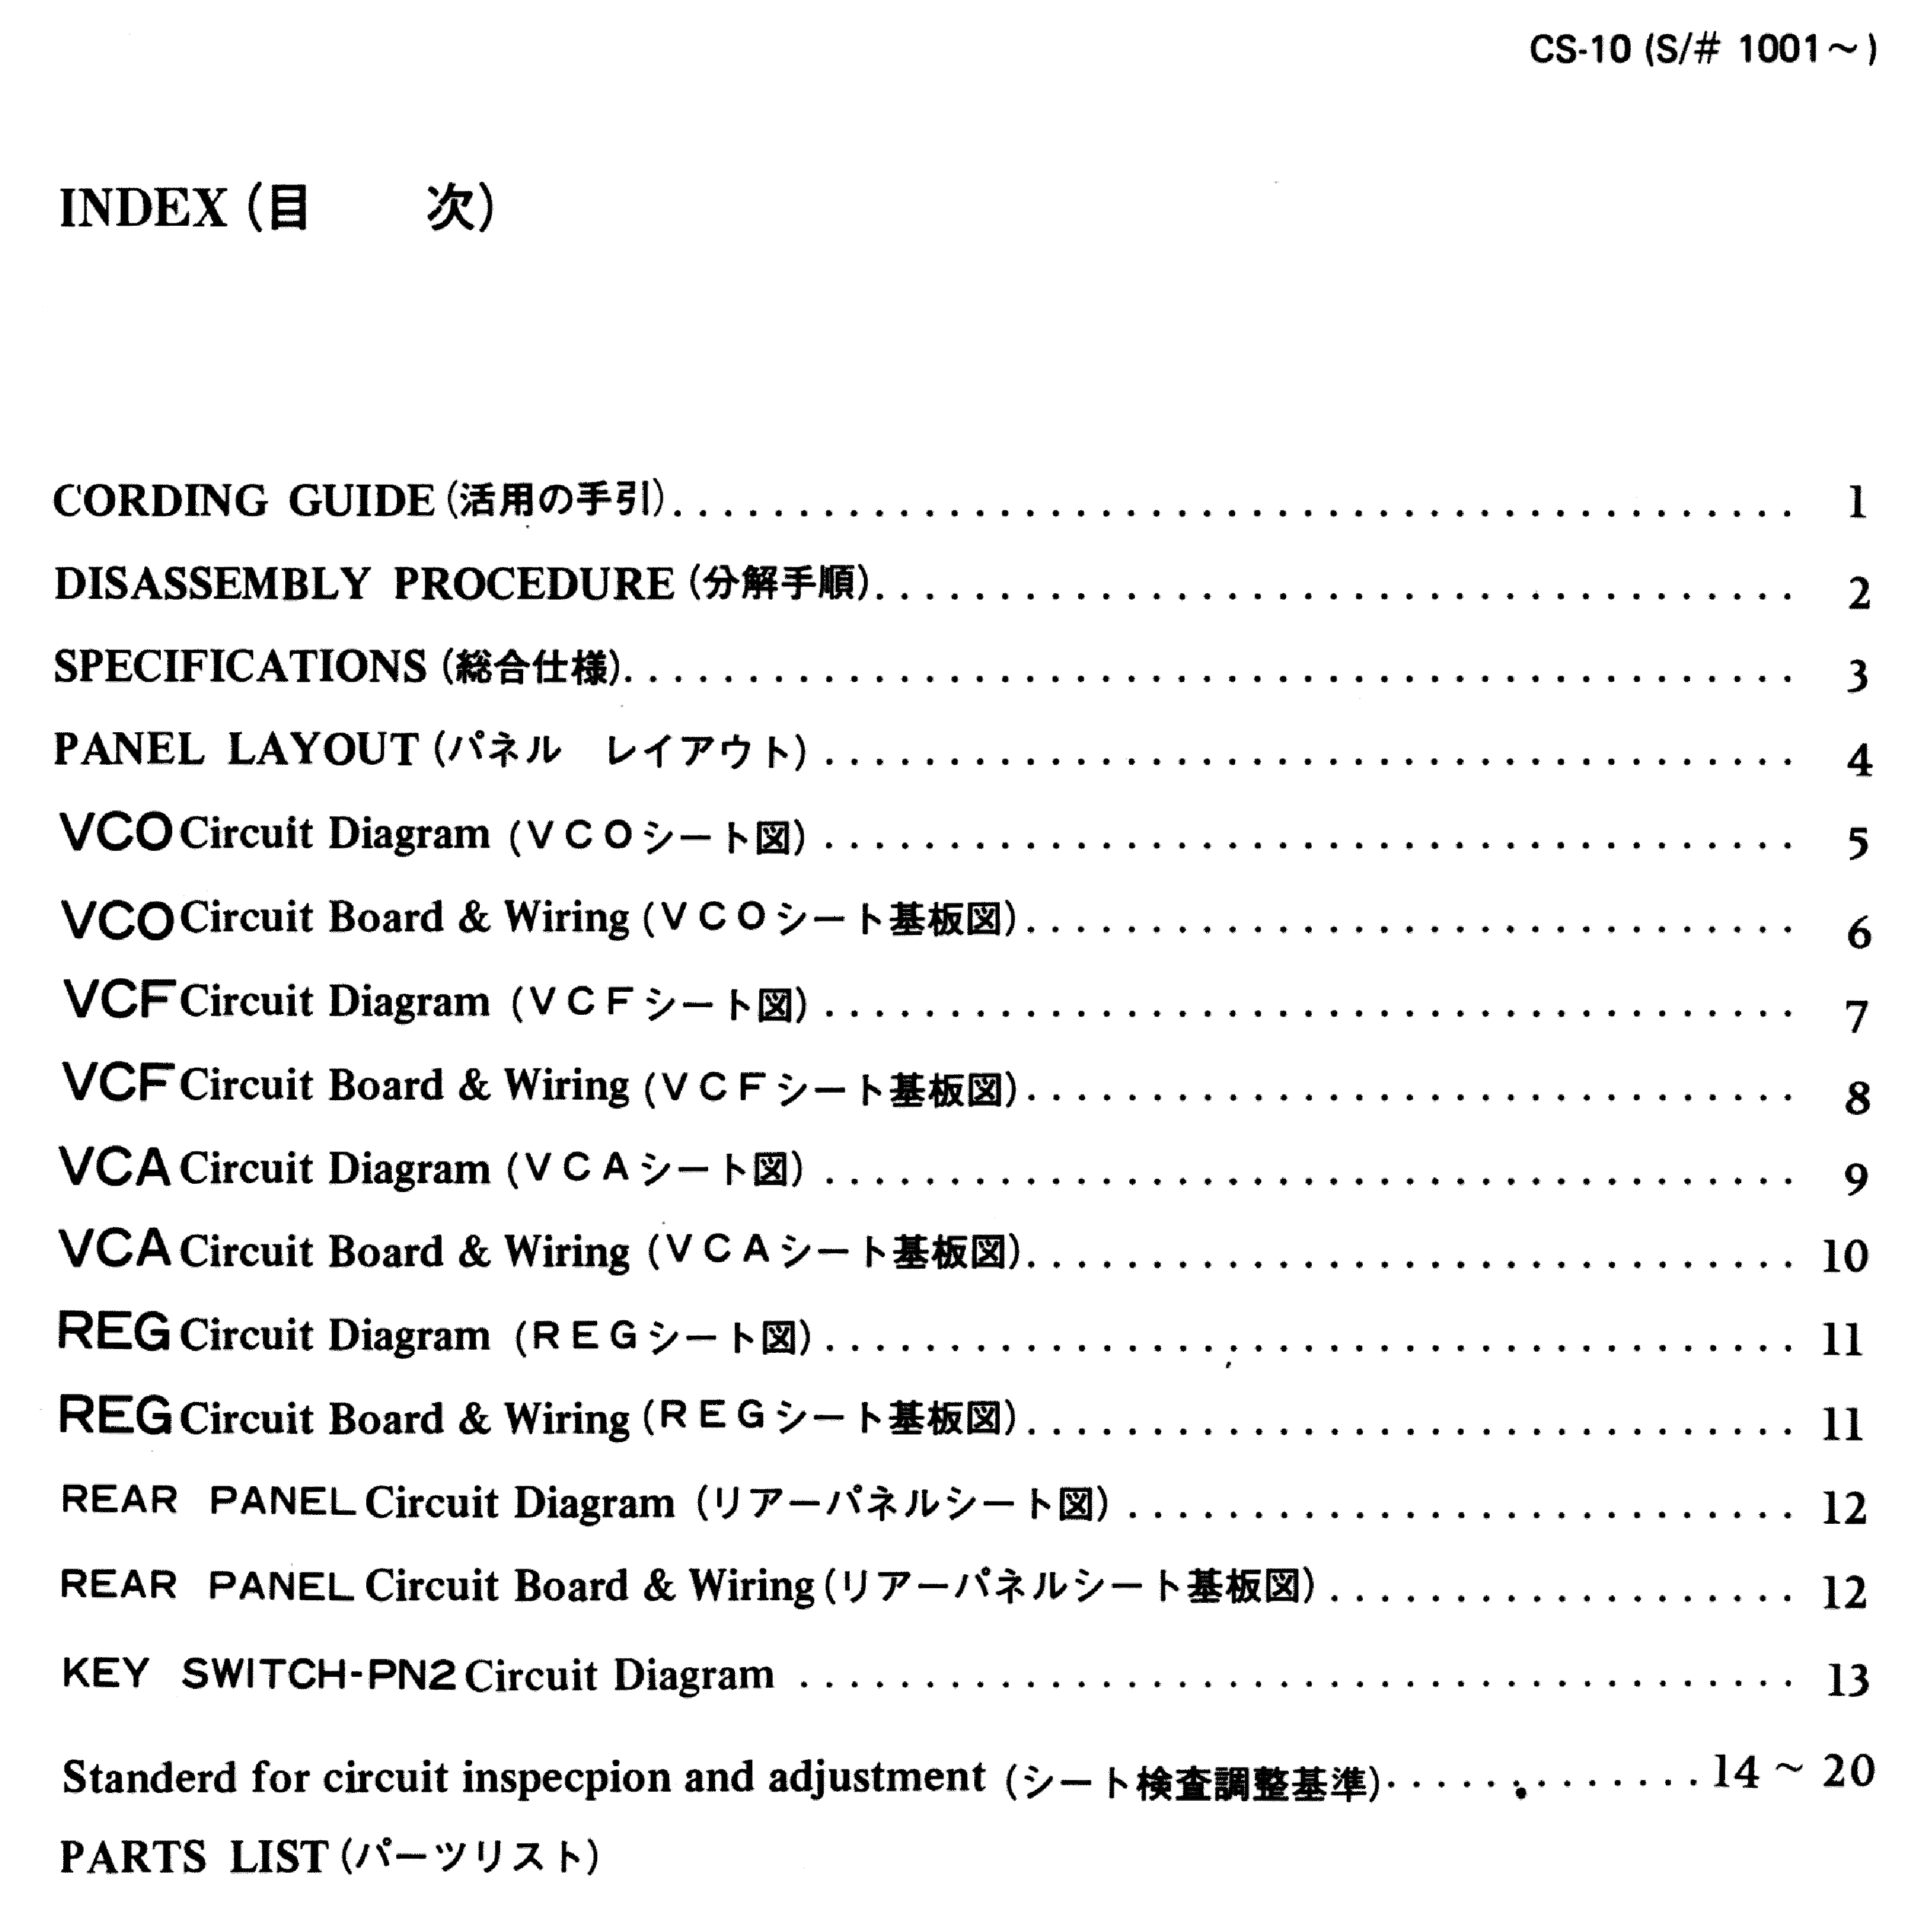 YAMAHA CS-10 ADJUSTMENT SCH 1 service manual (1st page)